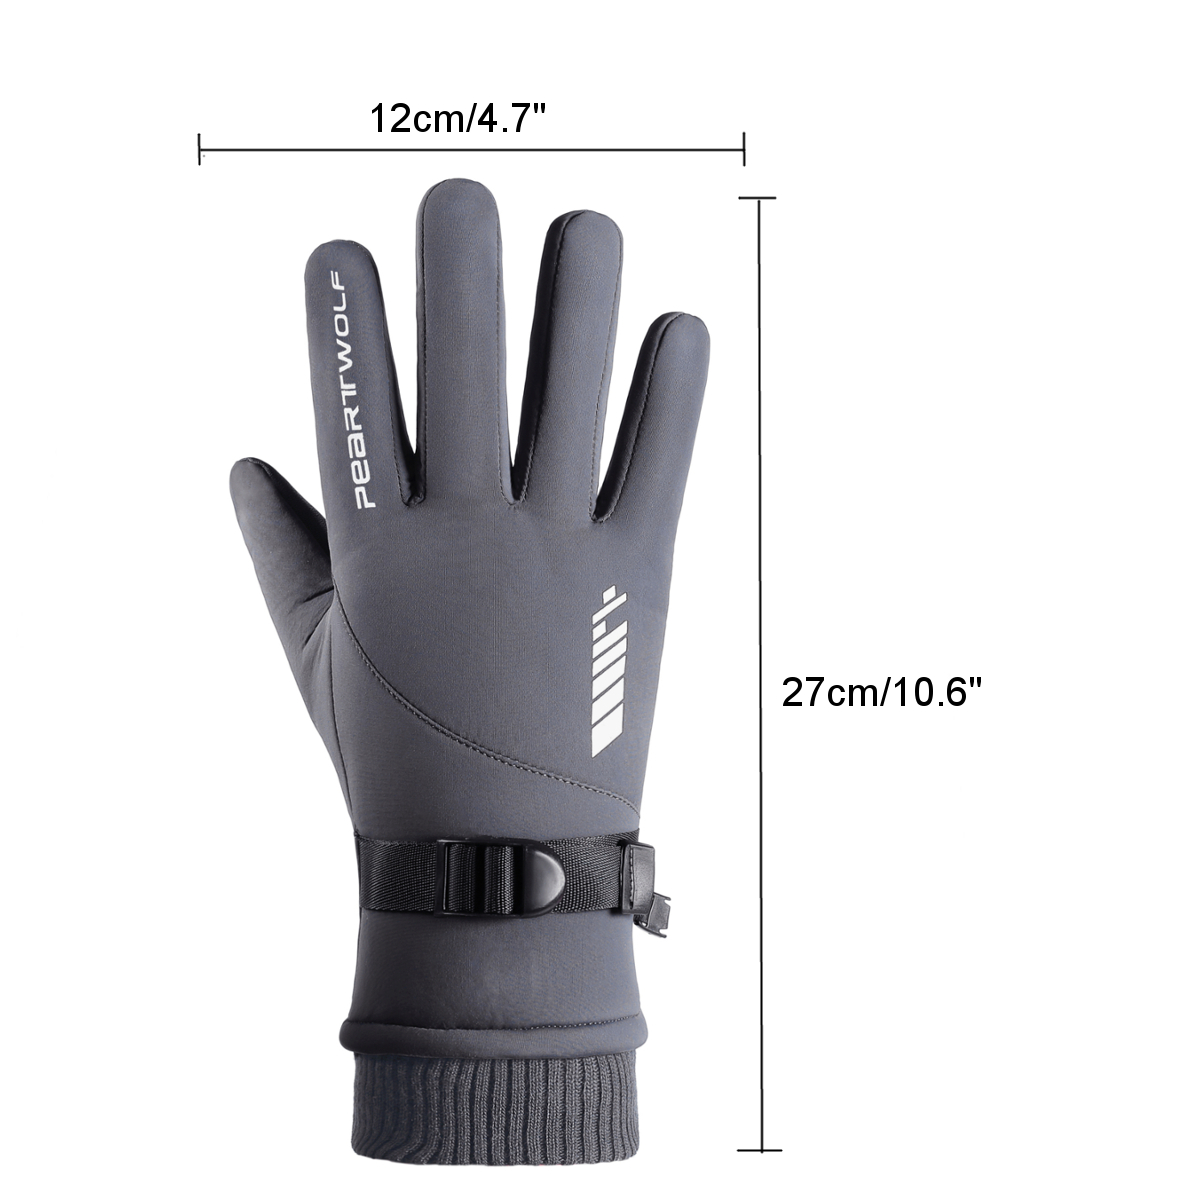 Outdoor-Skiing-Warm-Fleece-Gloves-Waterproof-Motocycle-Touch-Screen-Gloves-Motorbike-Racing-Riding-W-1771476-11